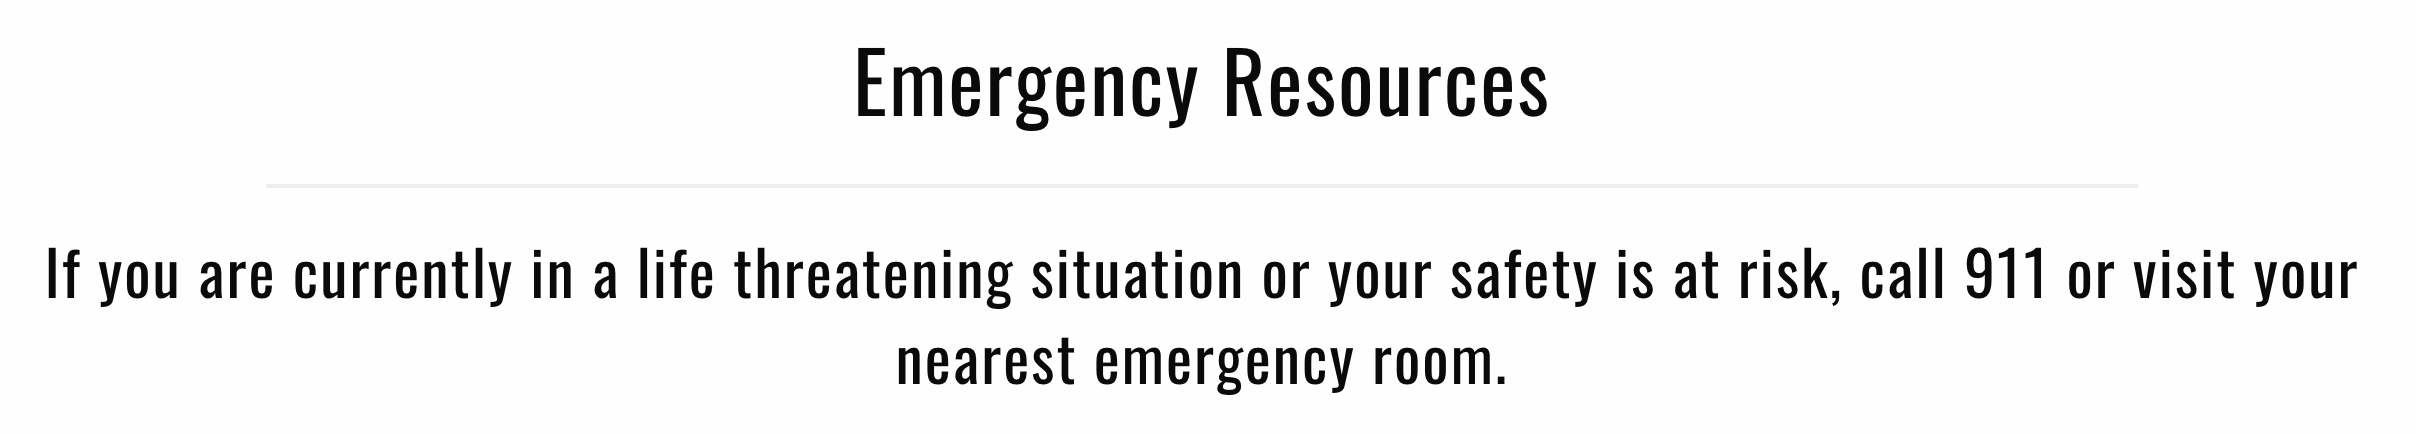 emergency resources